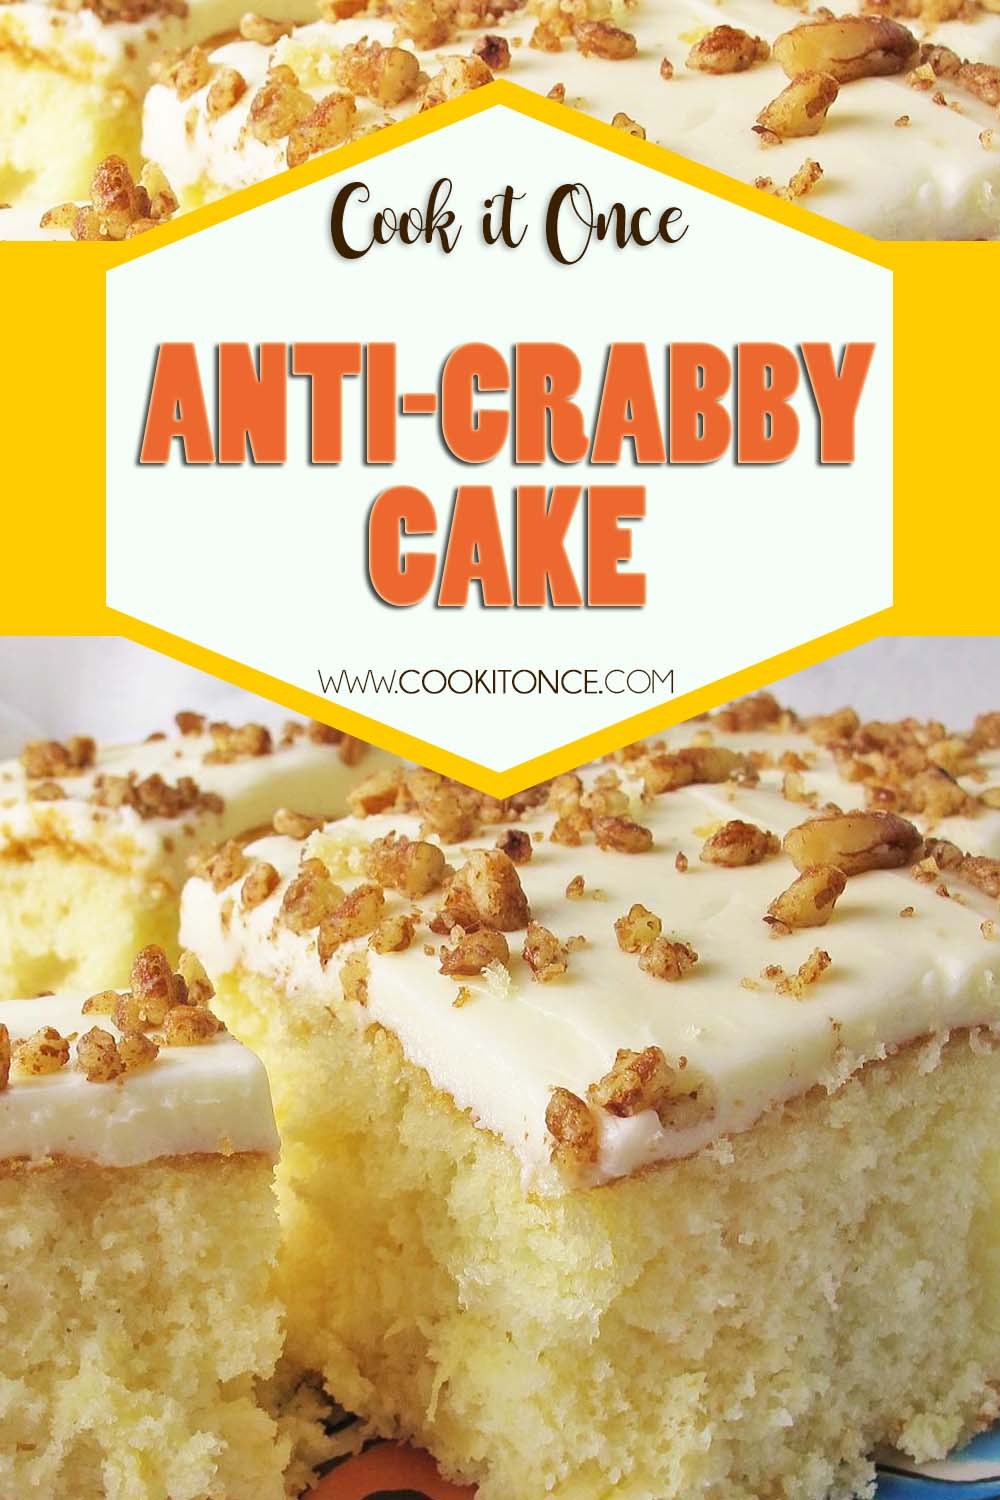 Crabby Cake Recipe